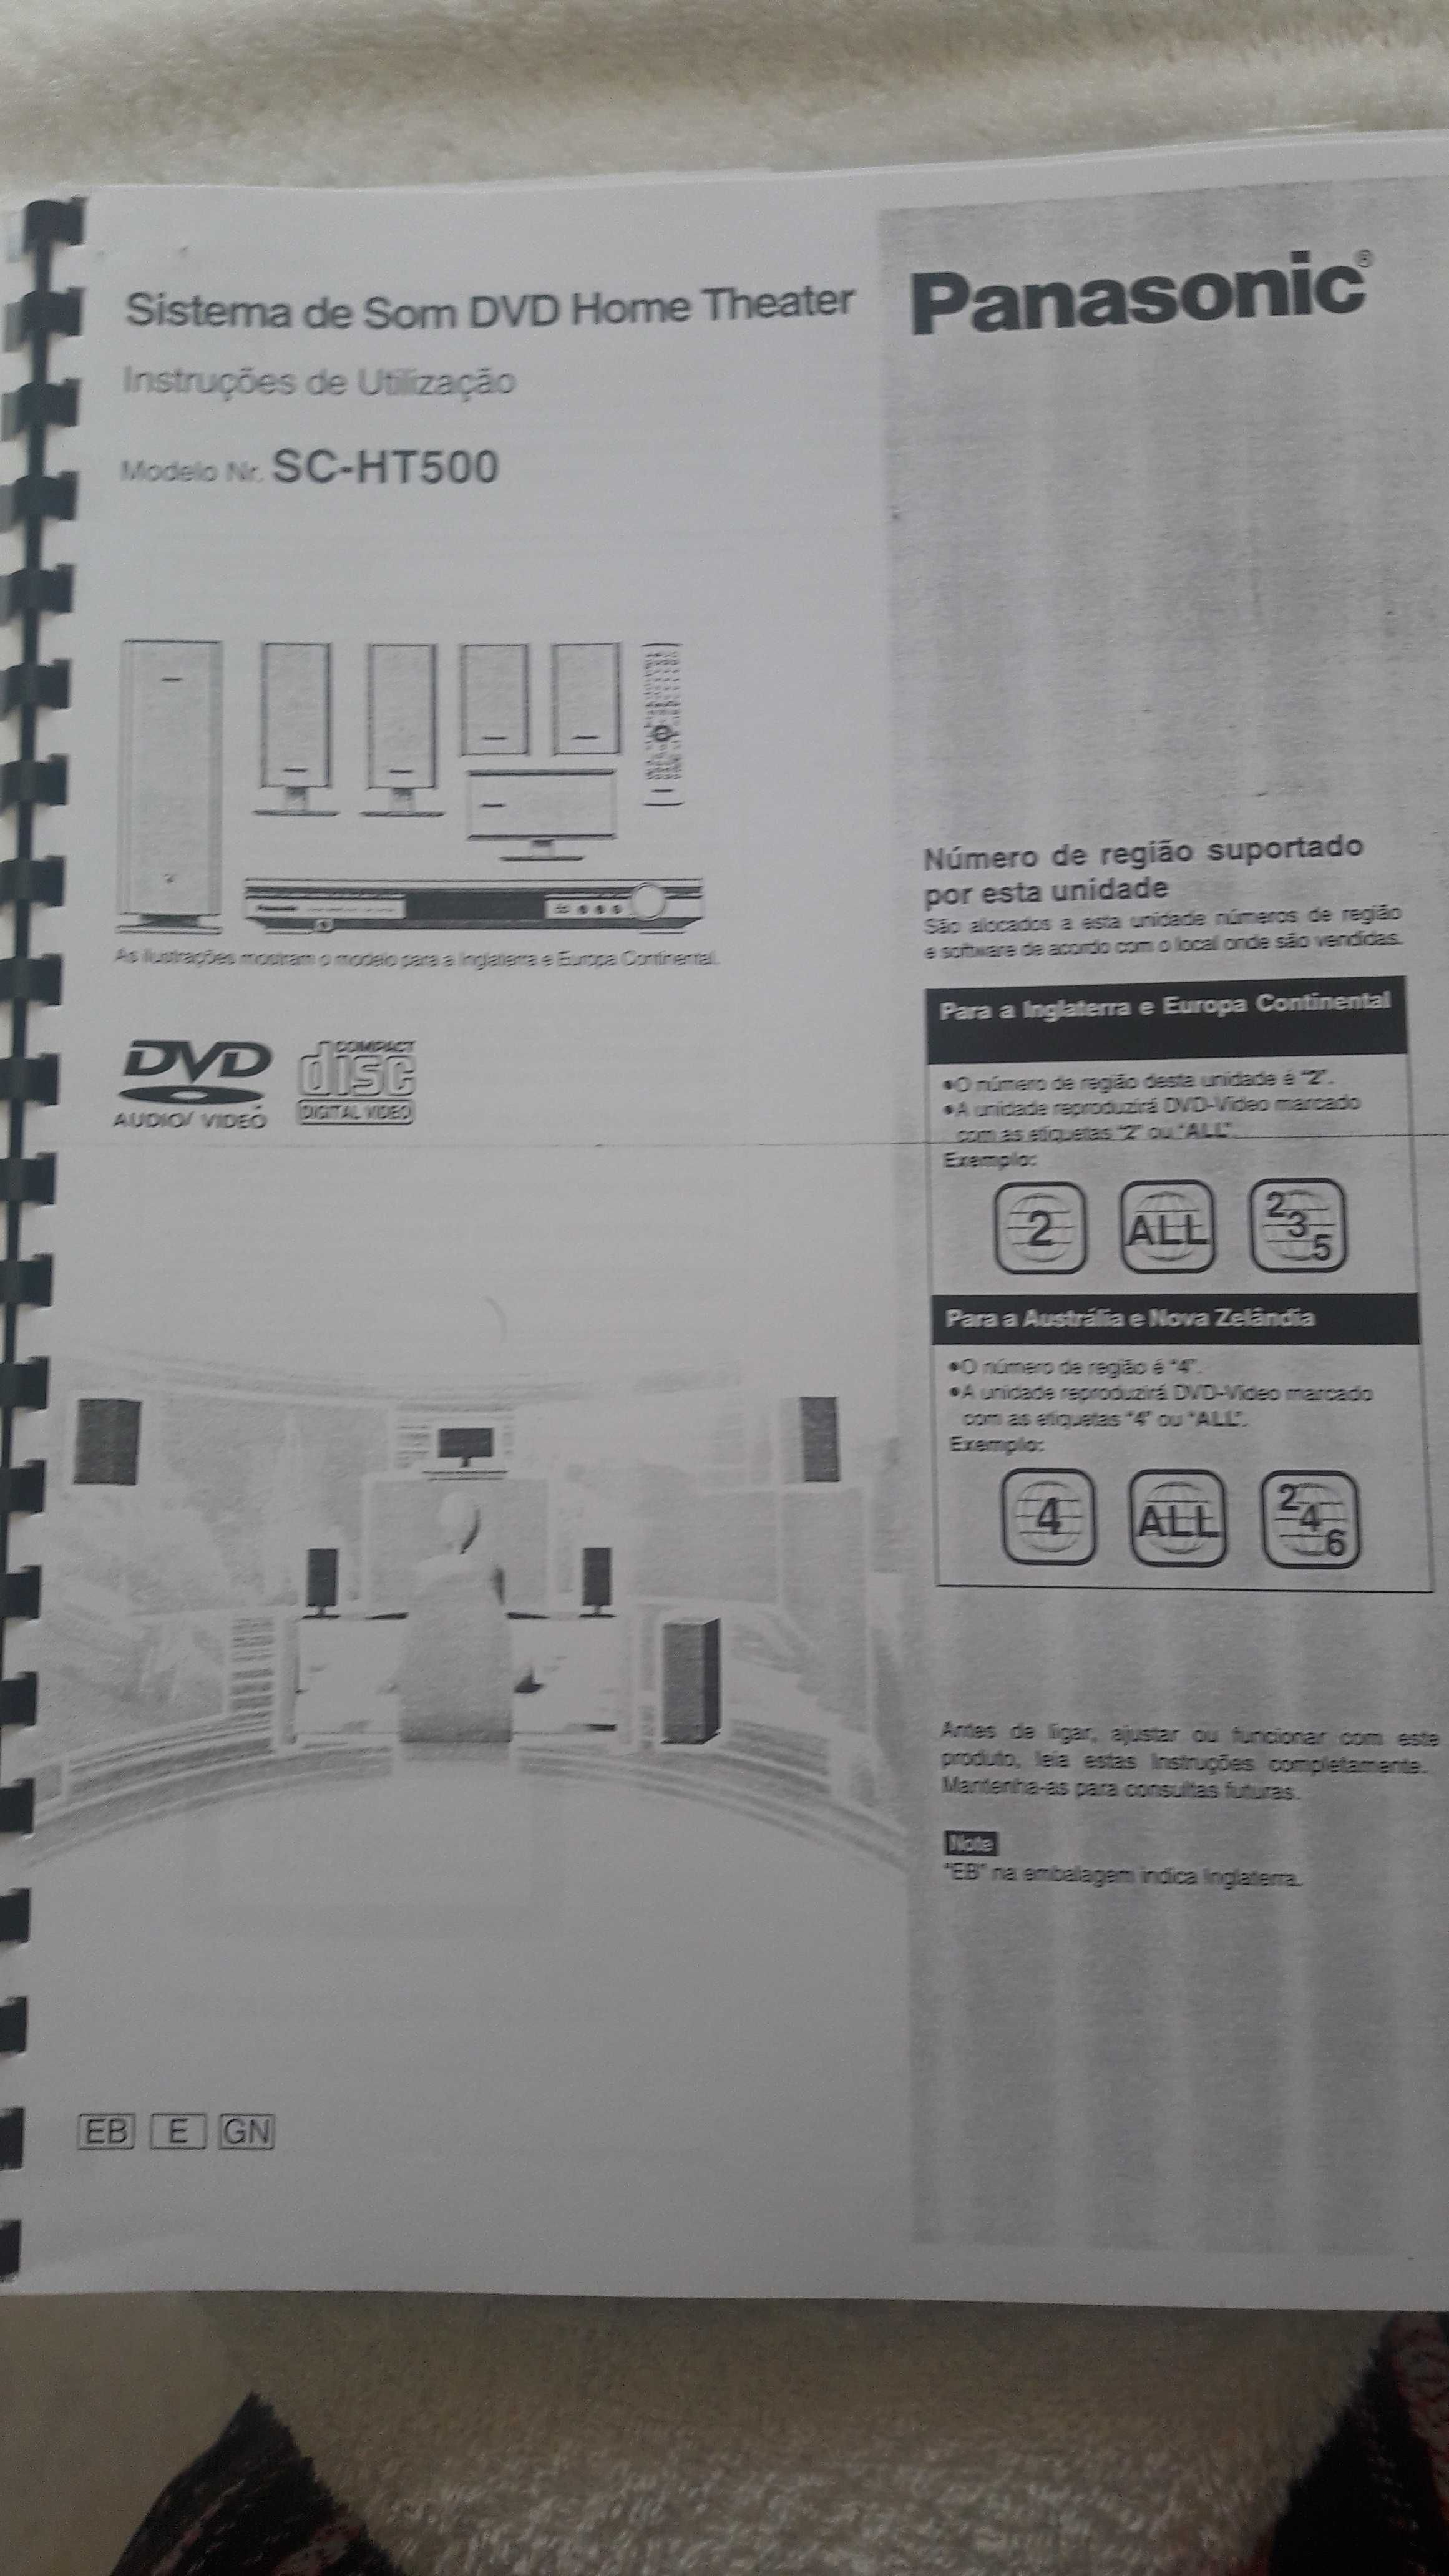 Sistema de Som DVD Home Theater Panasonic